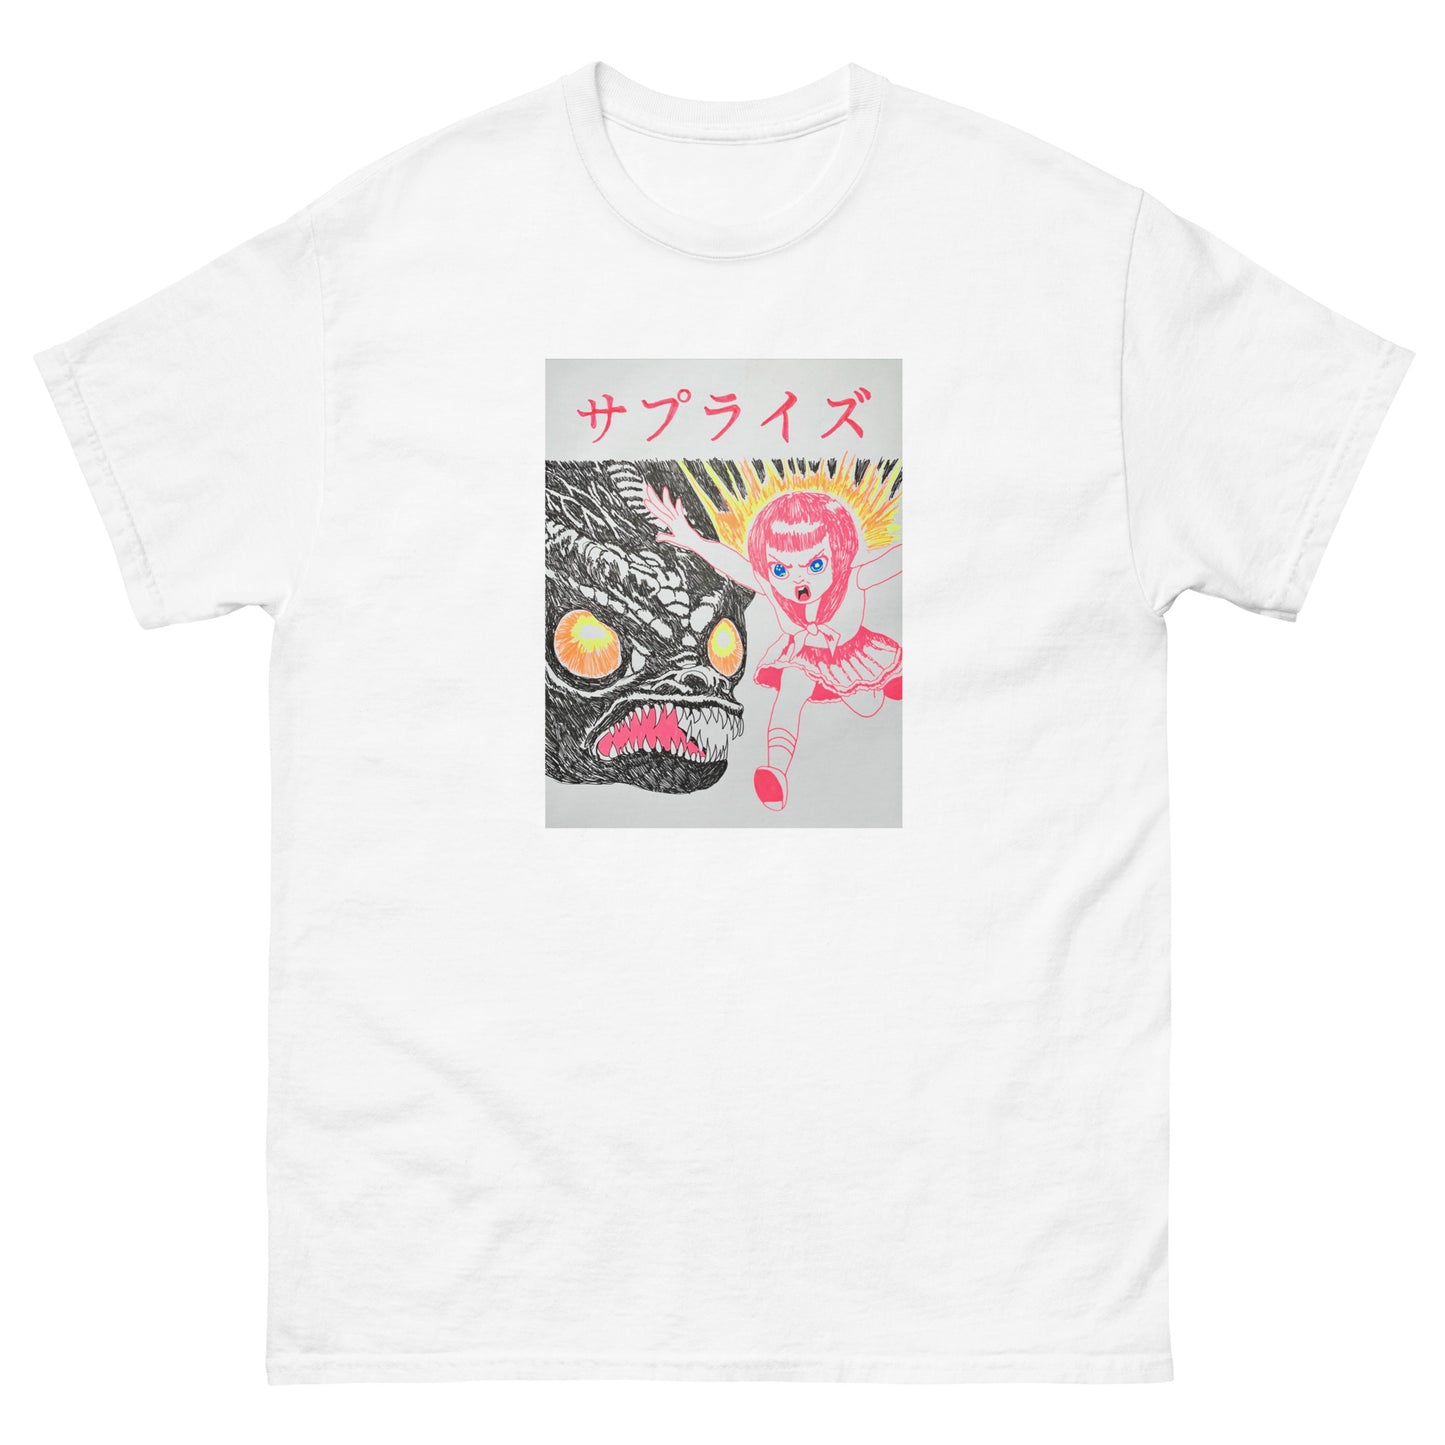 Black Fire 2 "サプライズ" T-Shirt